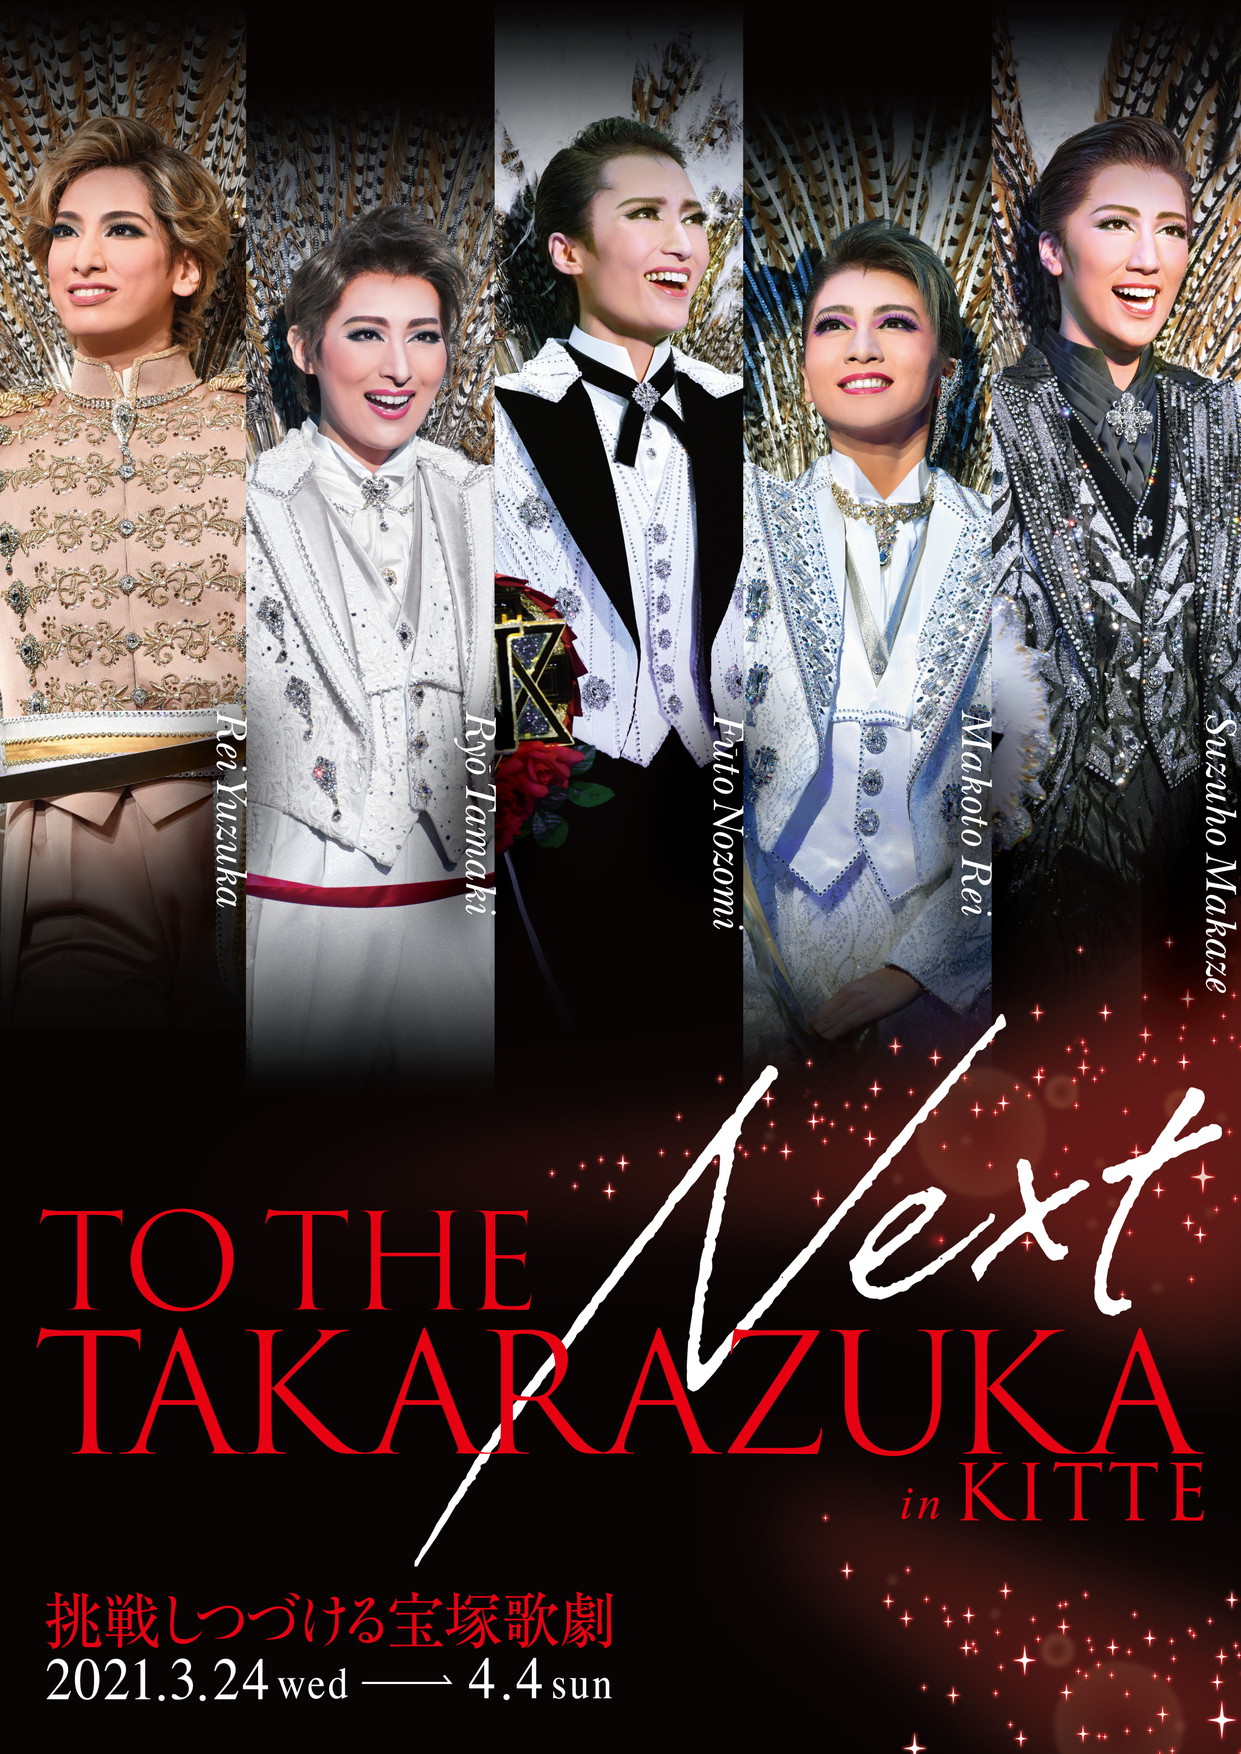  「 TO THE NEXT TAKARAZUKA －挑戦しつづける宝塚歌劇－」 